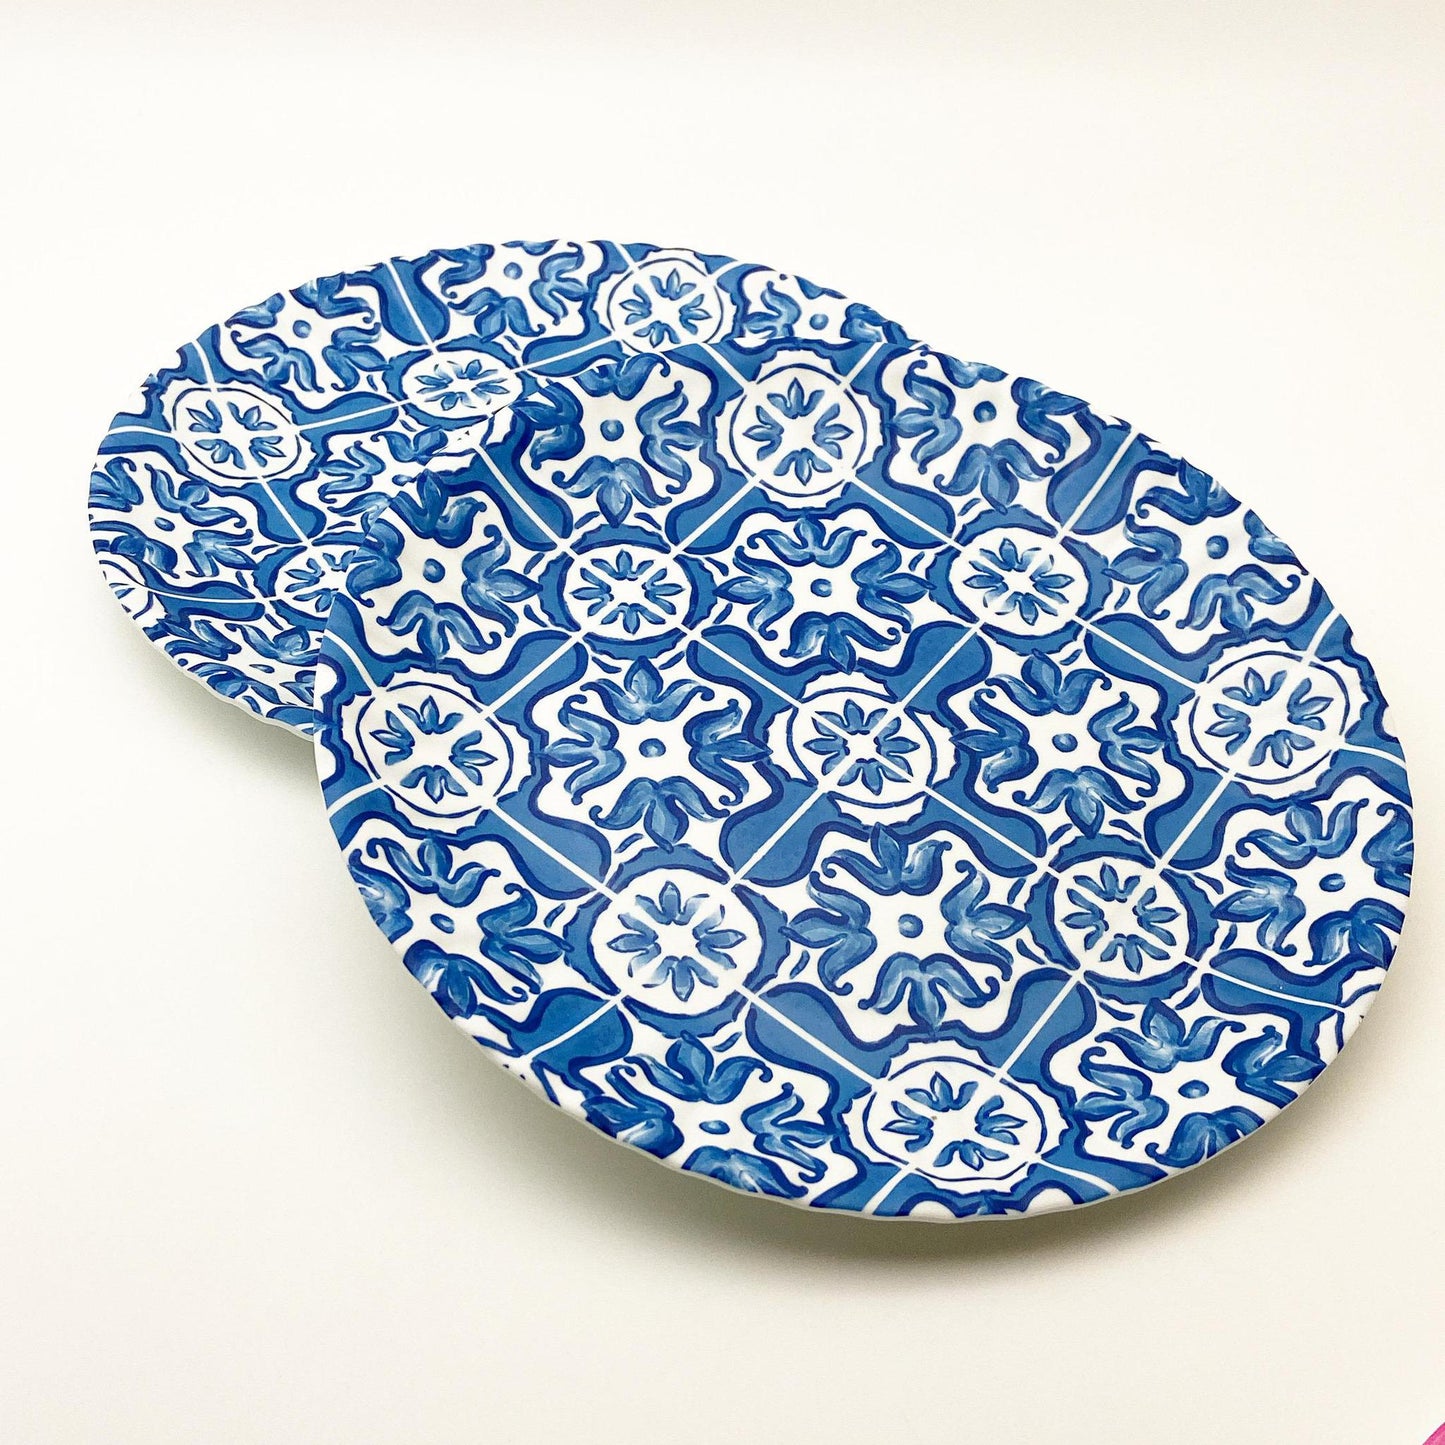 Plate - Melamine "Paper Plate" - Matching Blue Tiles